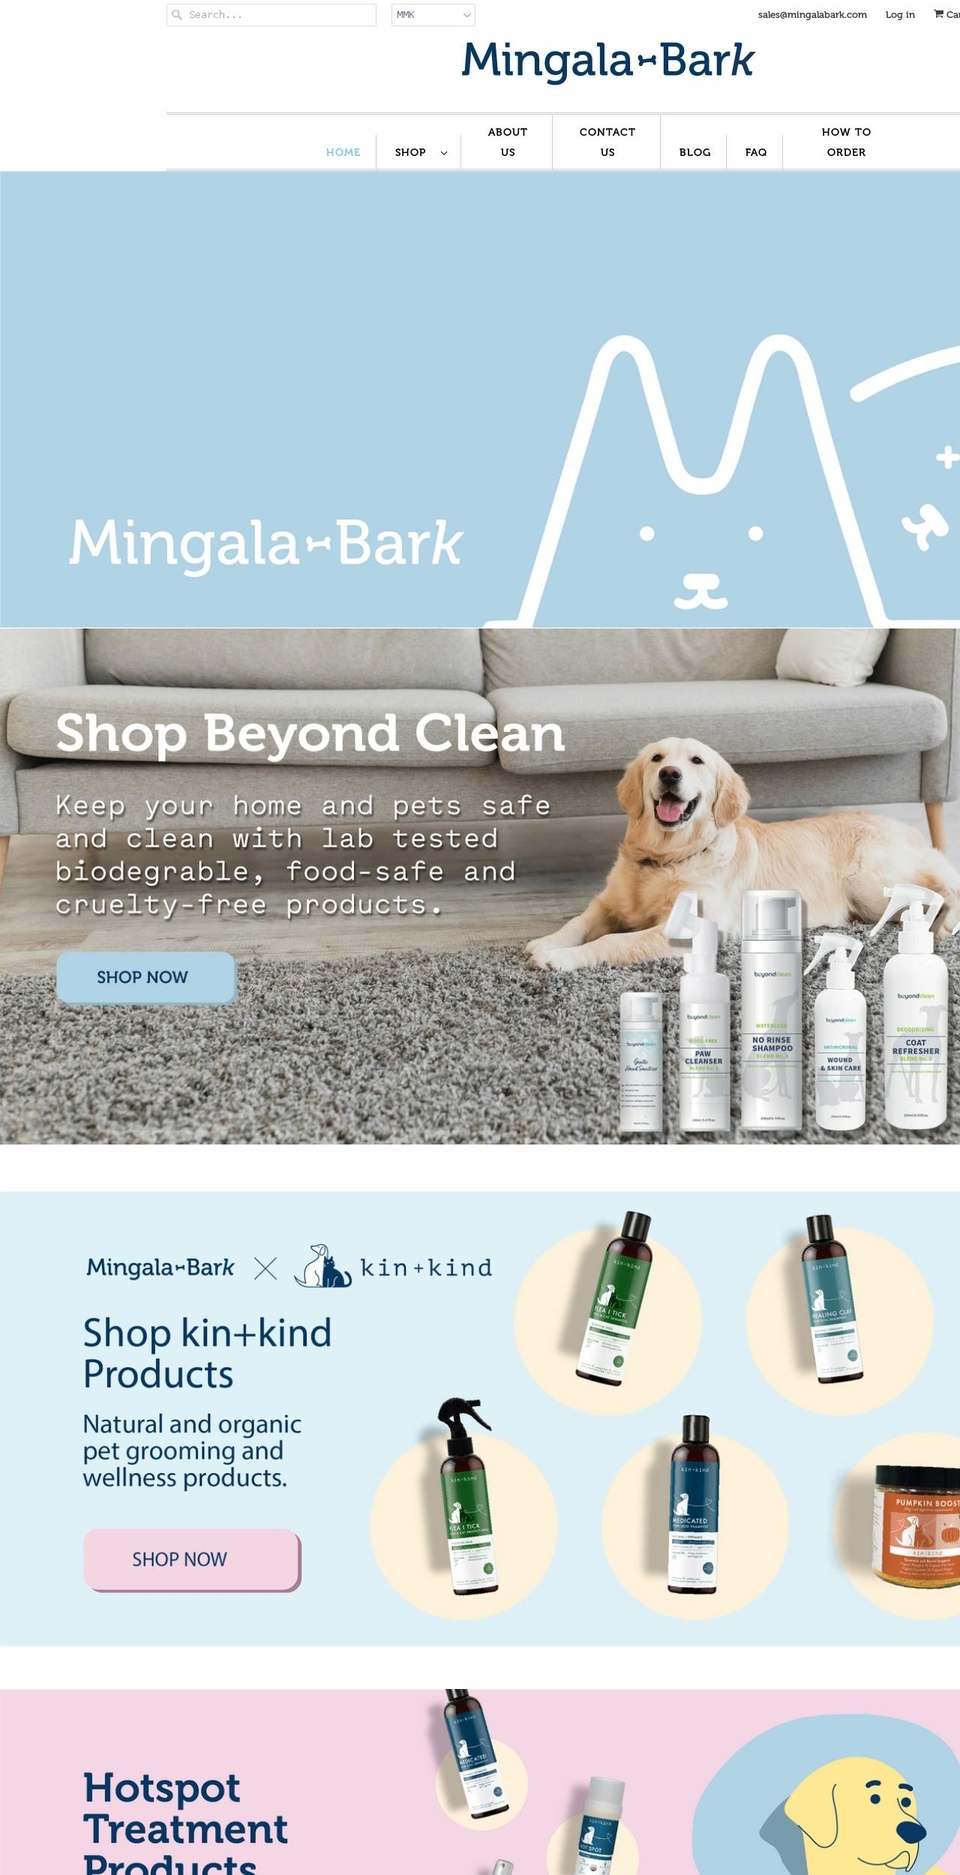 mingalabark.com shopify website screenshot